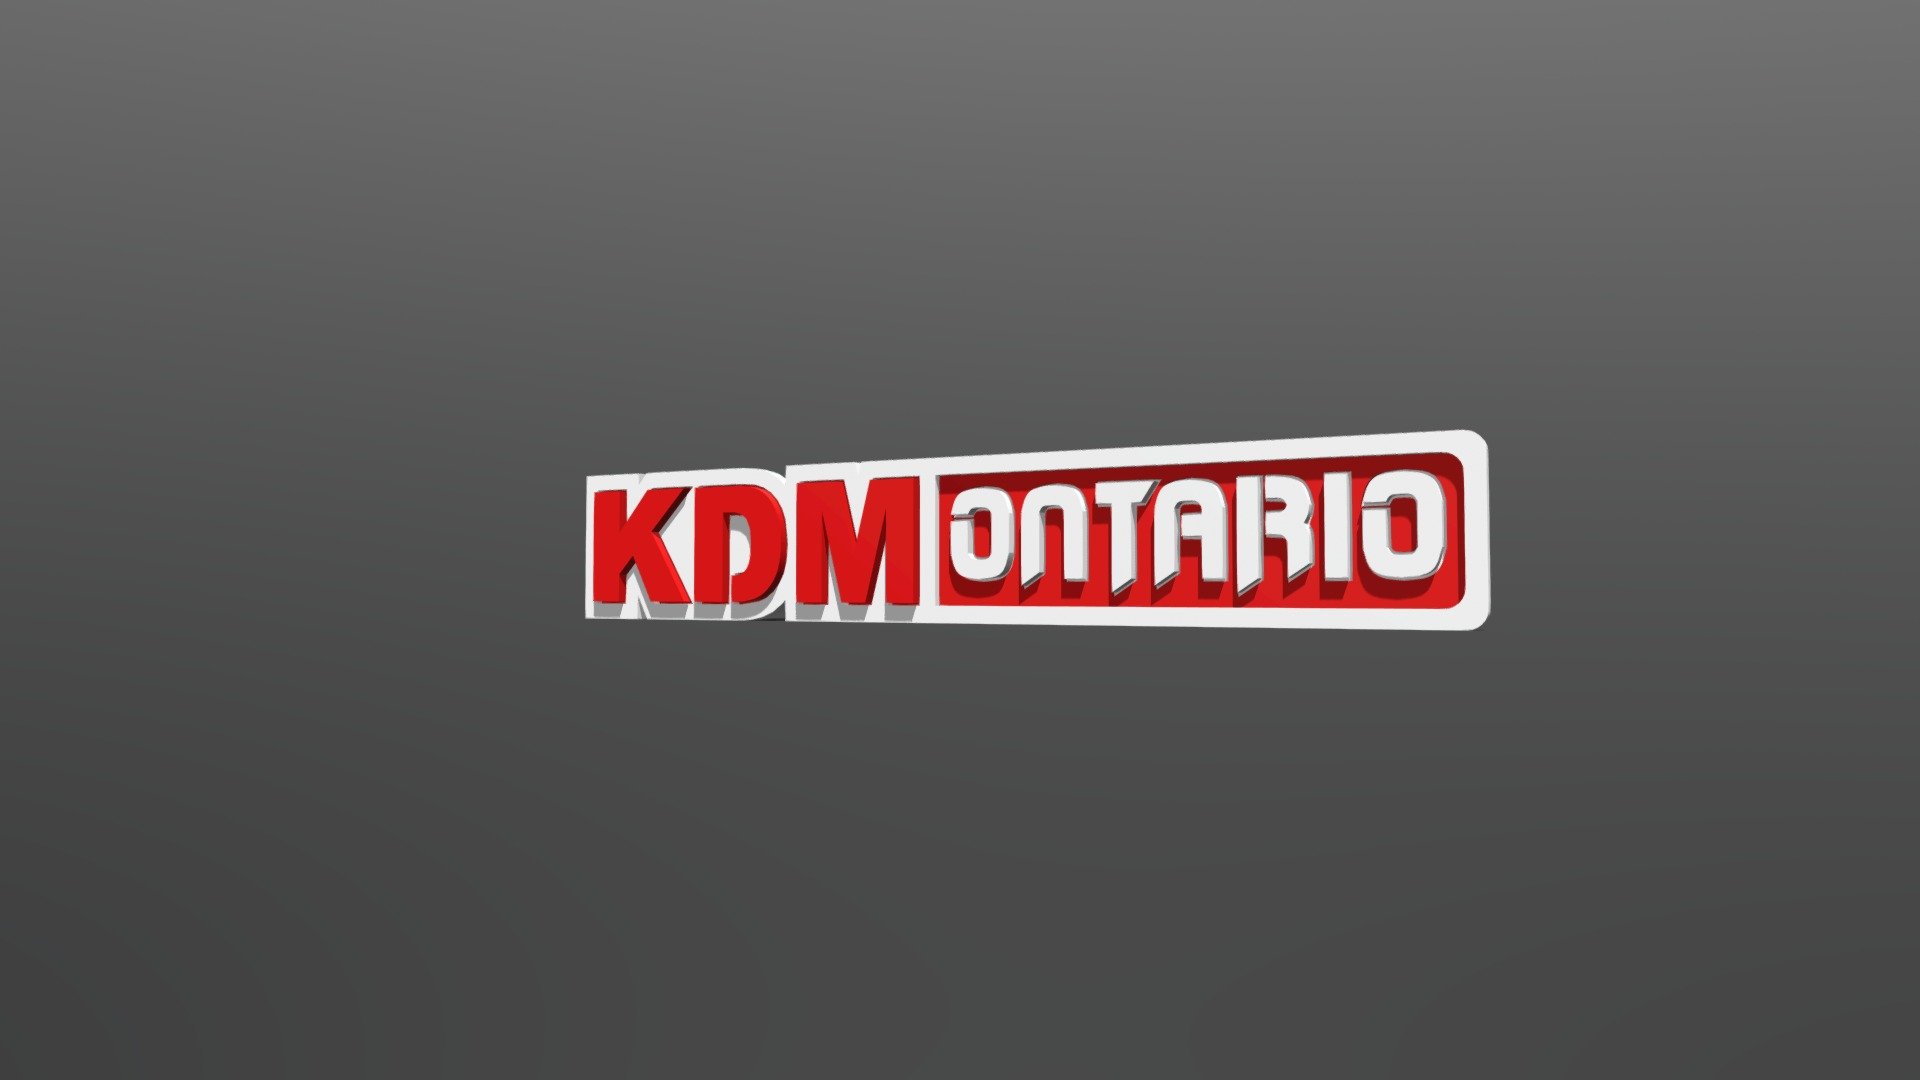 KDM Ontario